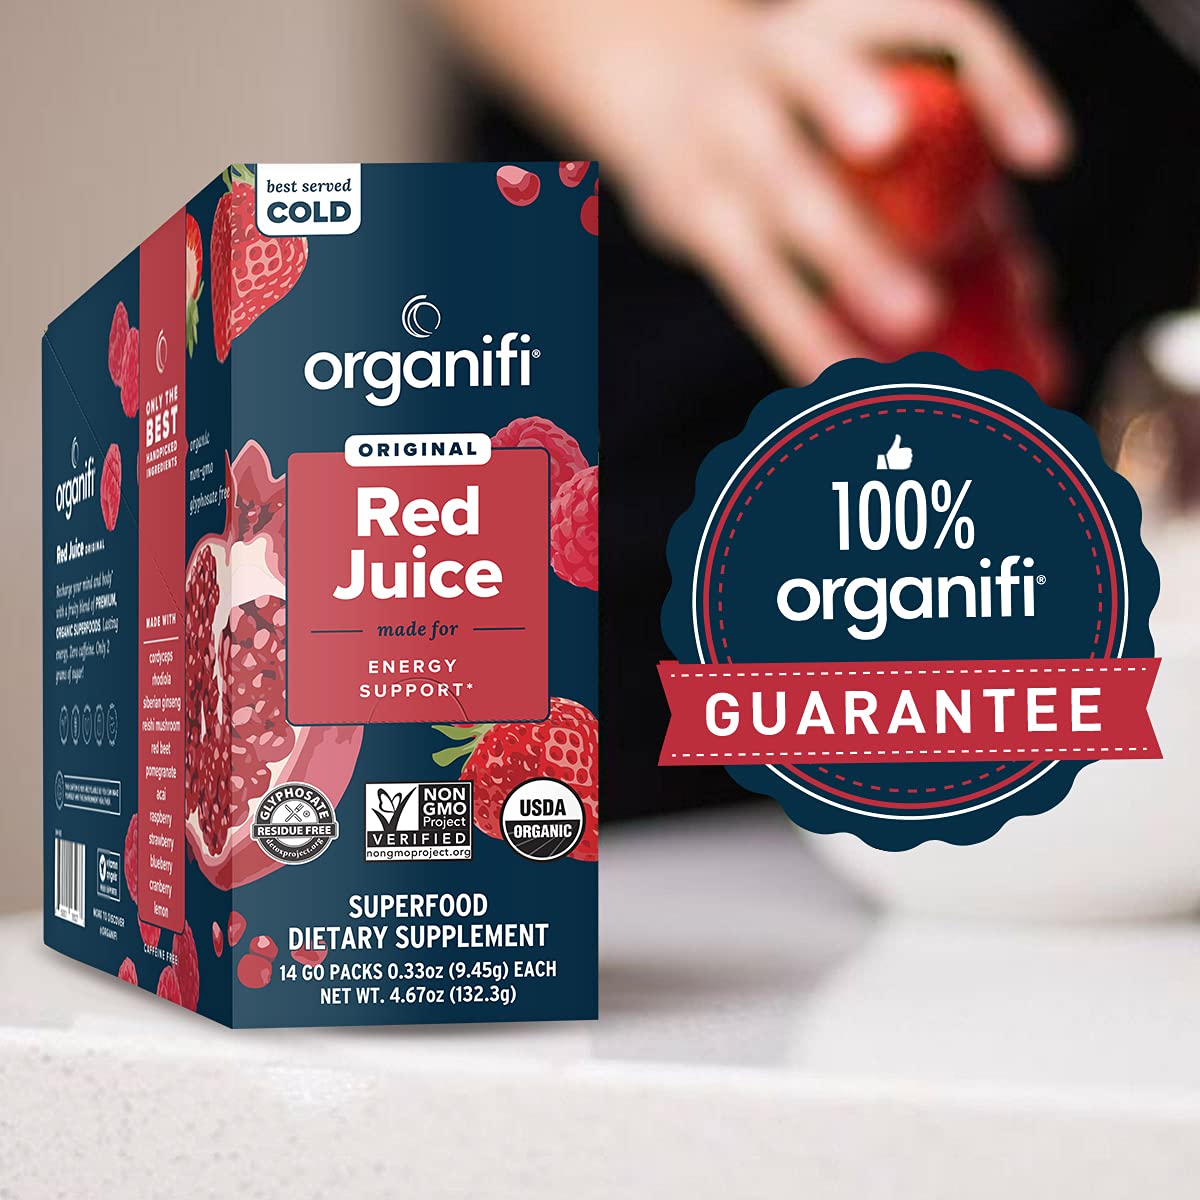 a box of Organifi Red Juice with a 100% Organifi Guarantee logo